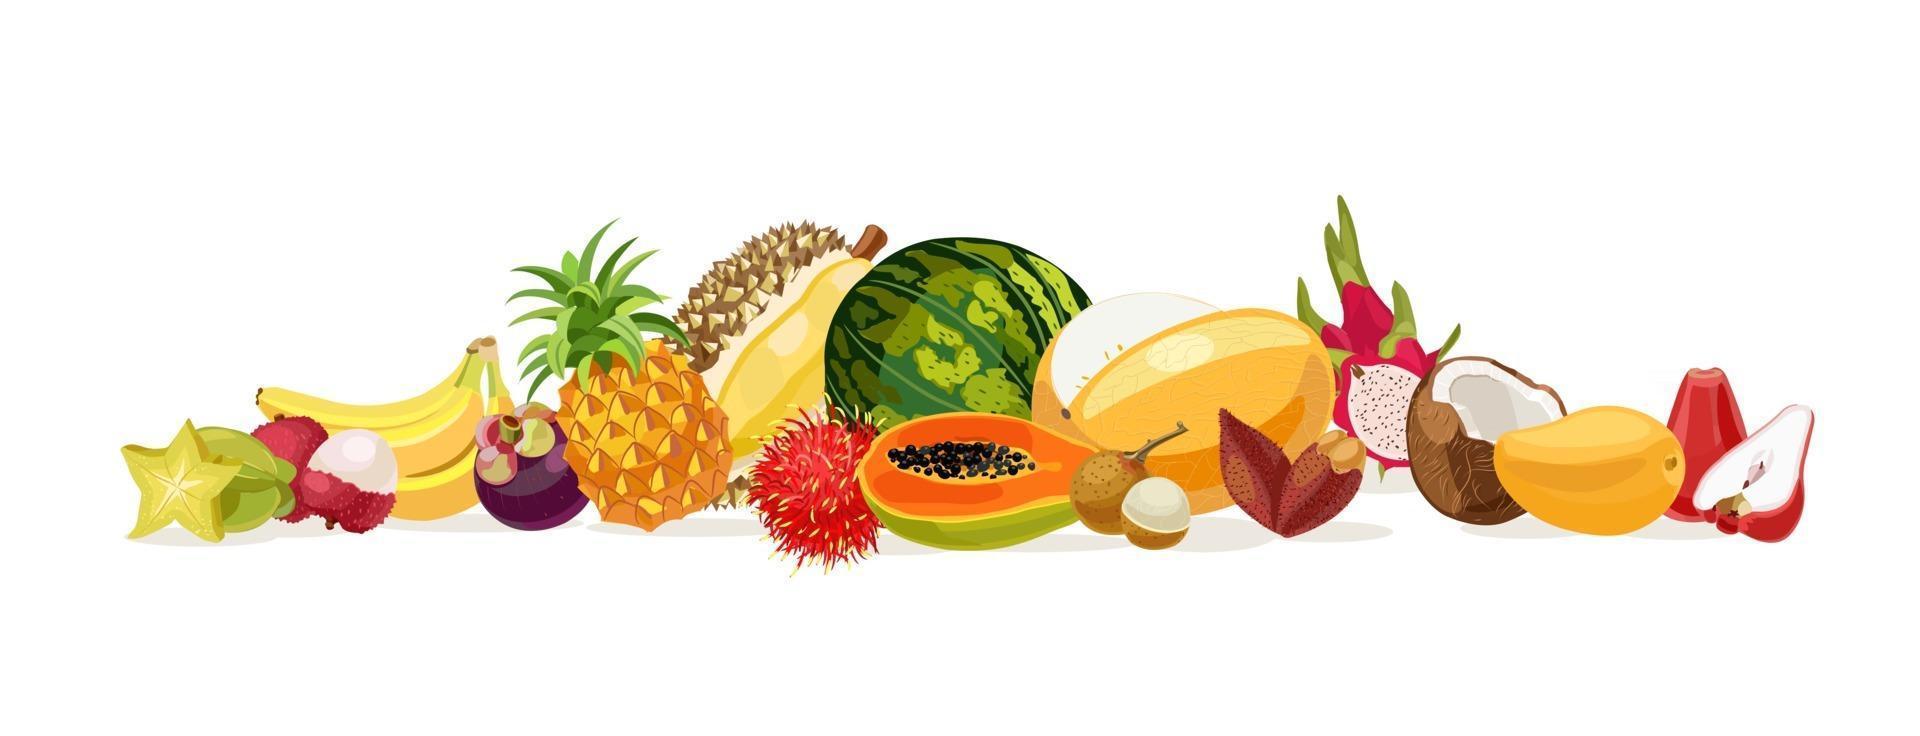 Thaise vruchten. fruit uit thailand. banaan, kokosnoot, meloen, watermeloen, carambola, papaya, rozenappel, durian, lichee, mango, mangosteen, drakenvruchten, ramboetan, ananas. vector illustratie